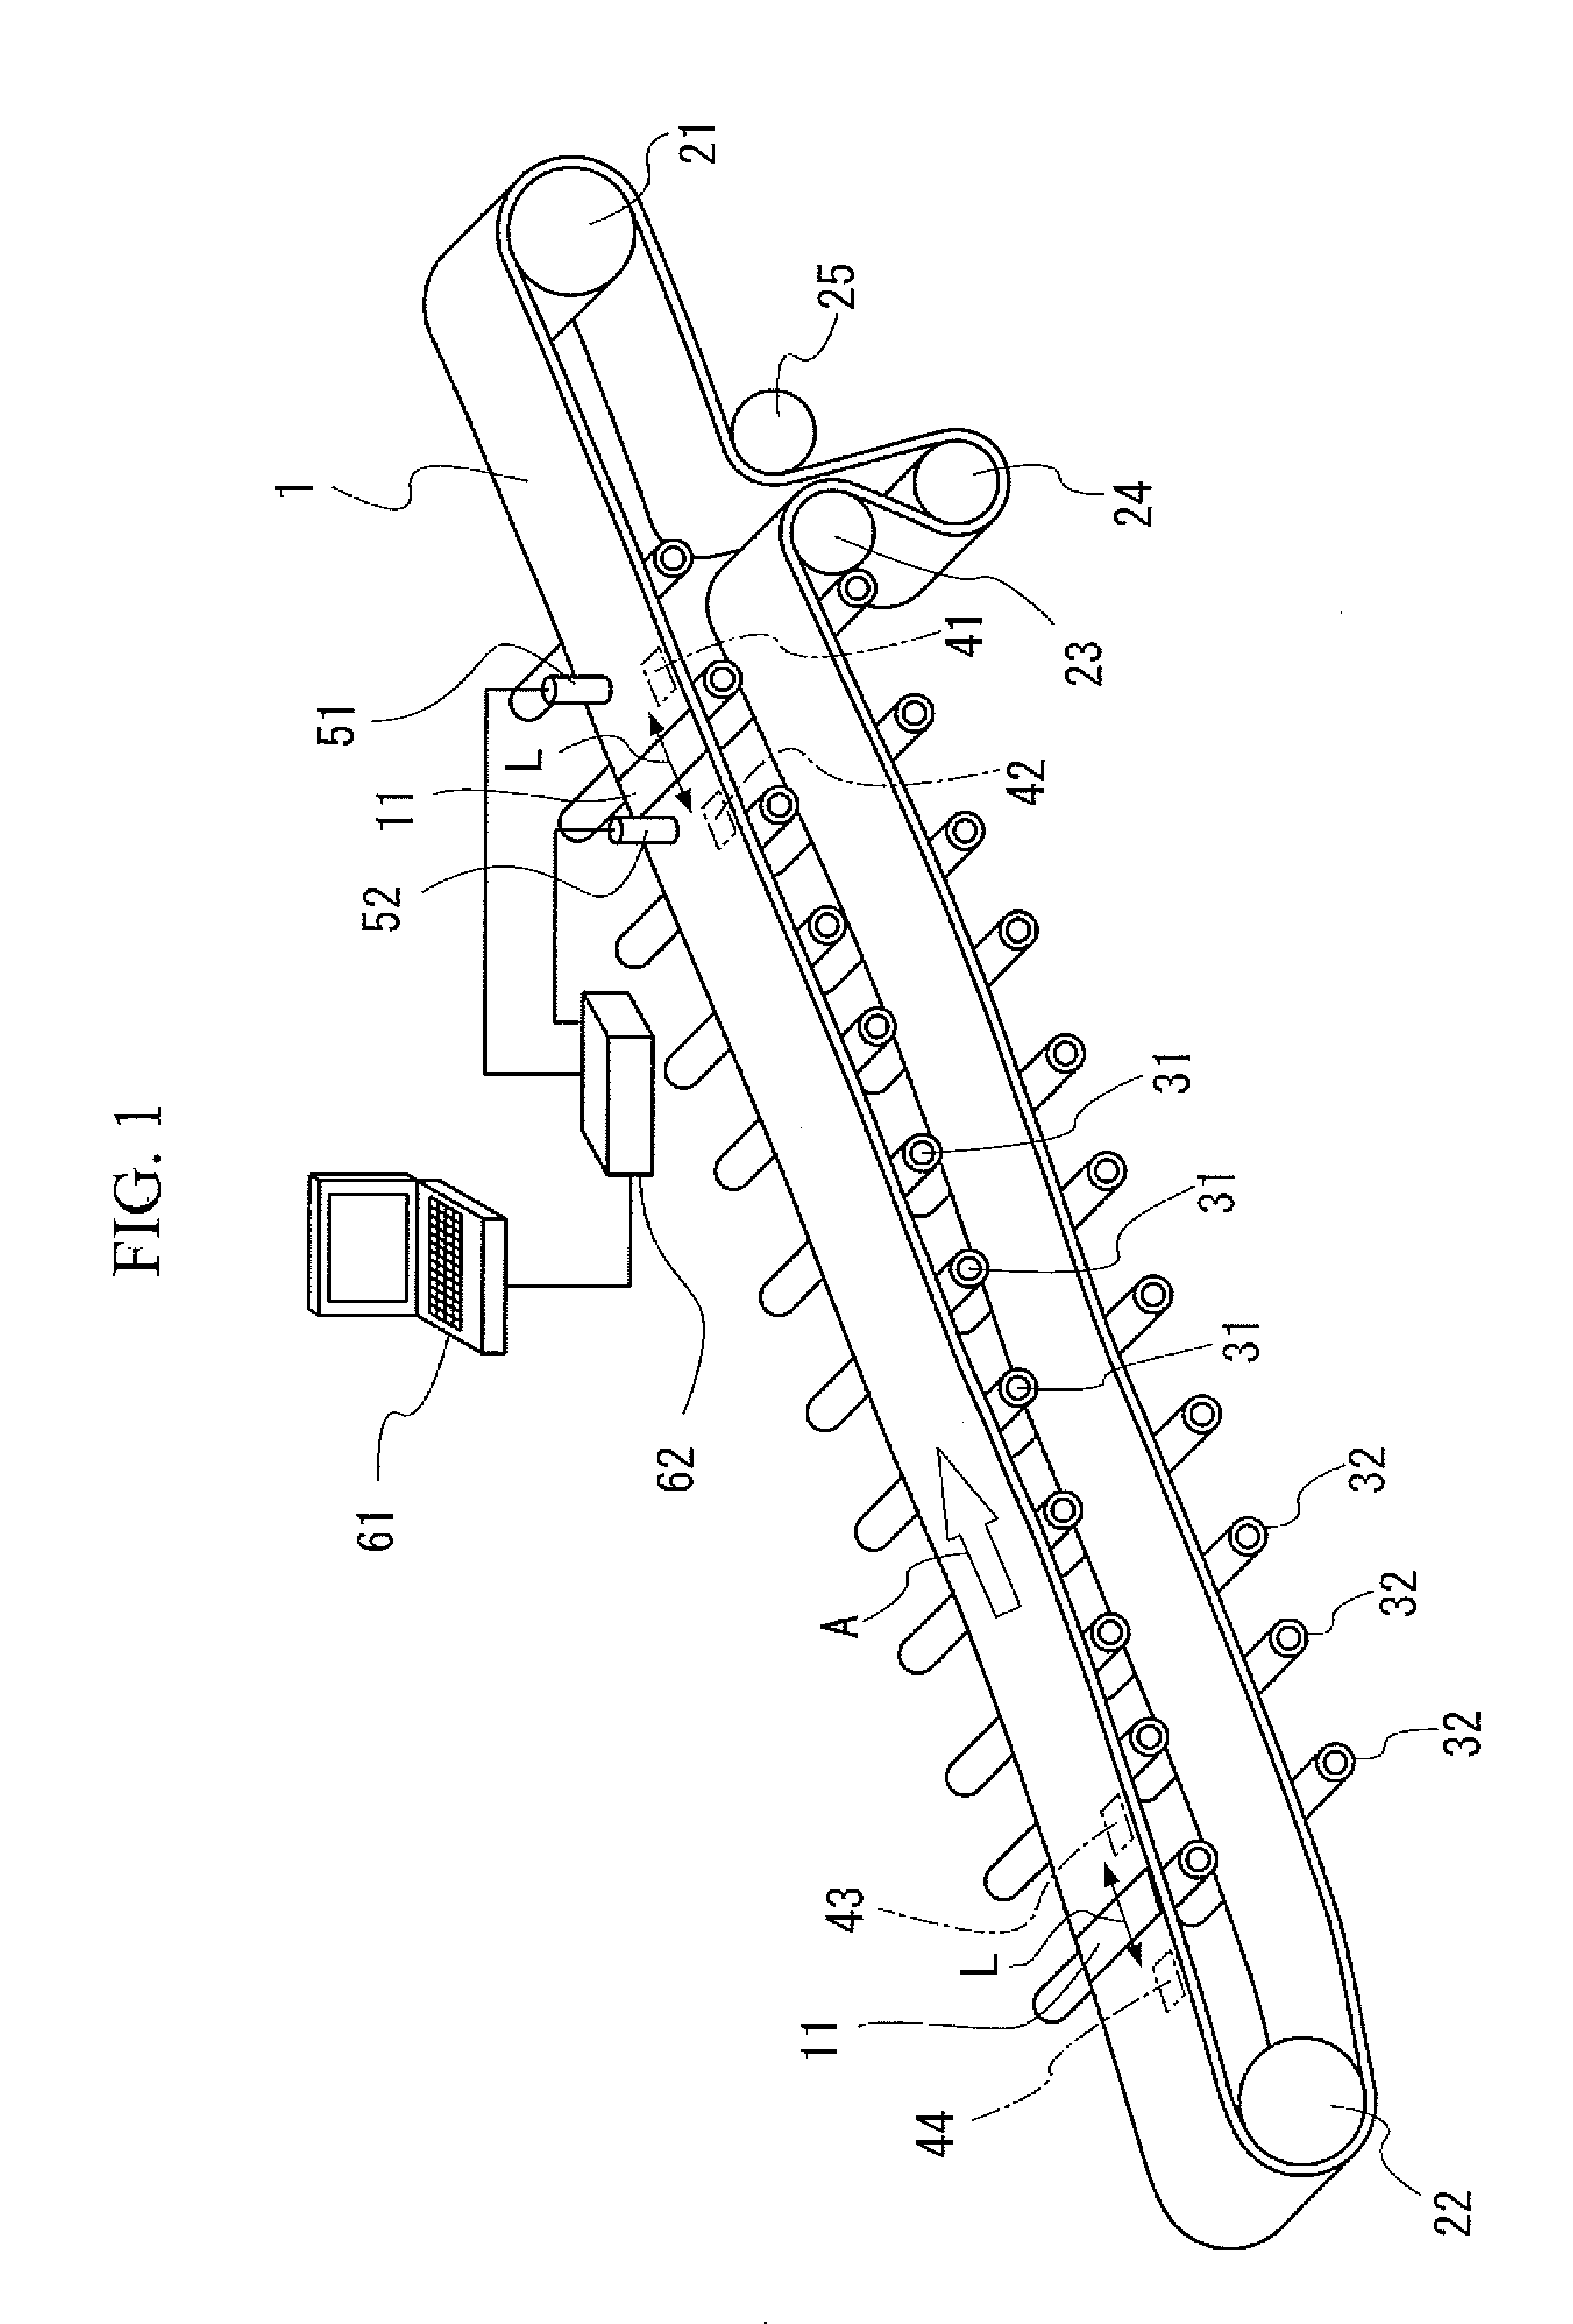 Monitoring system of conveyor belt